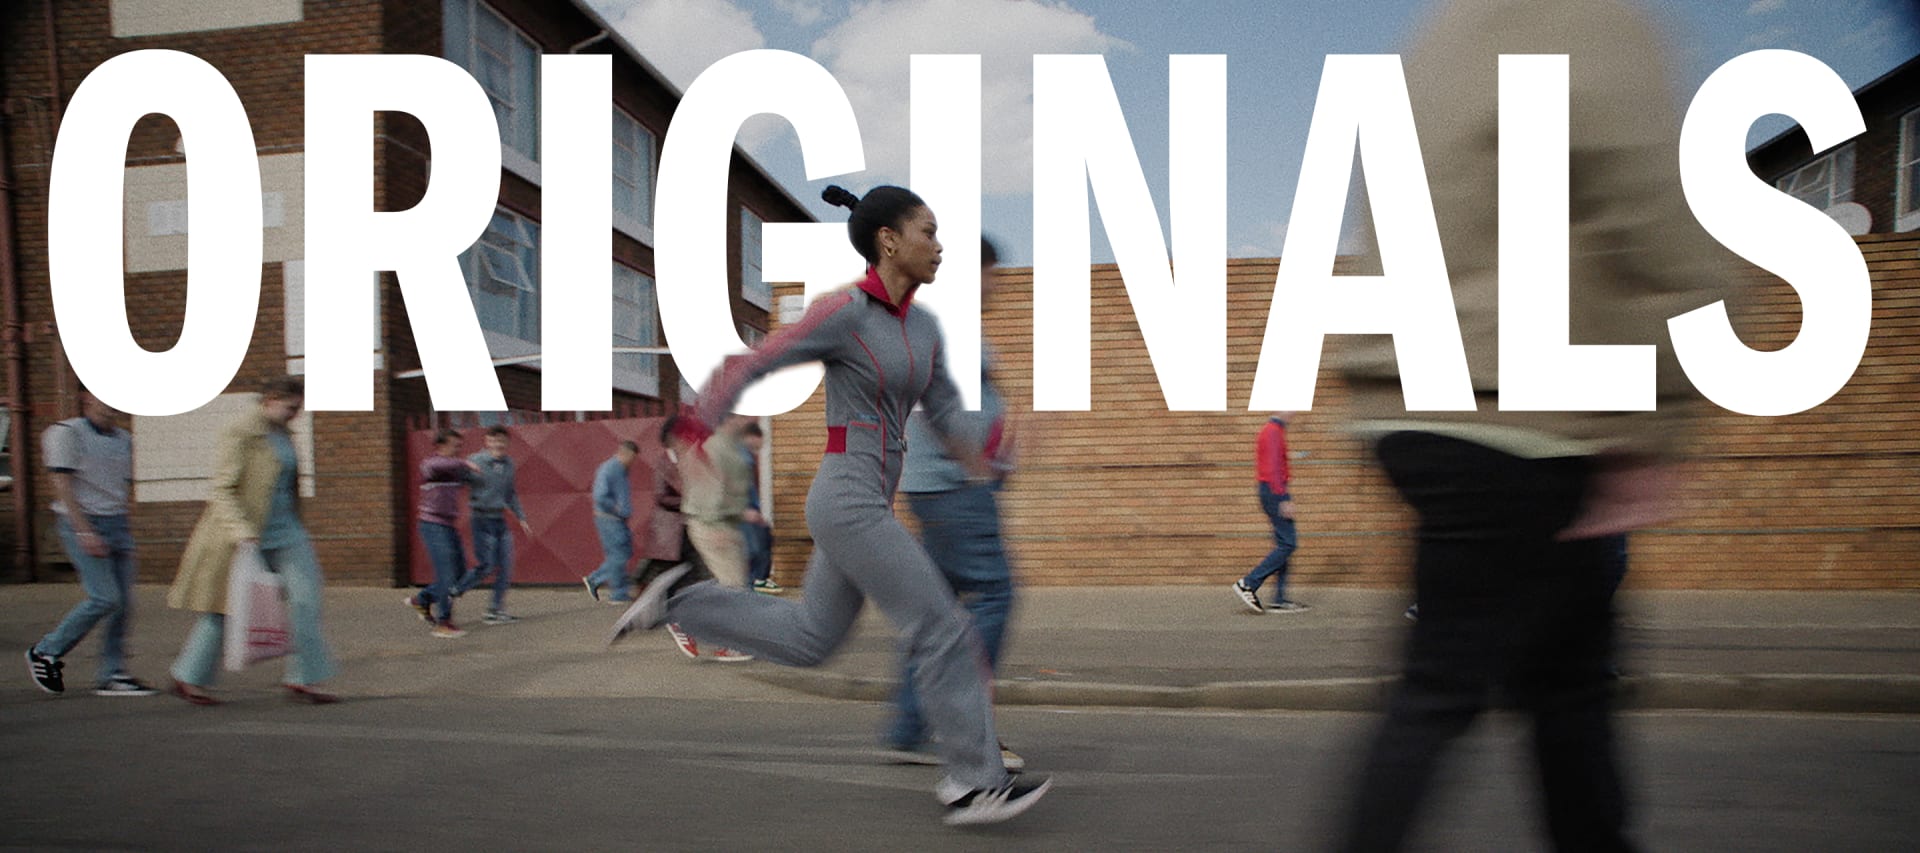 A person runs through an industrial setting, wearing adidas Originals.